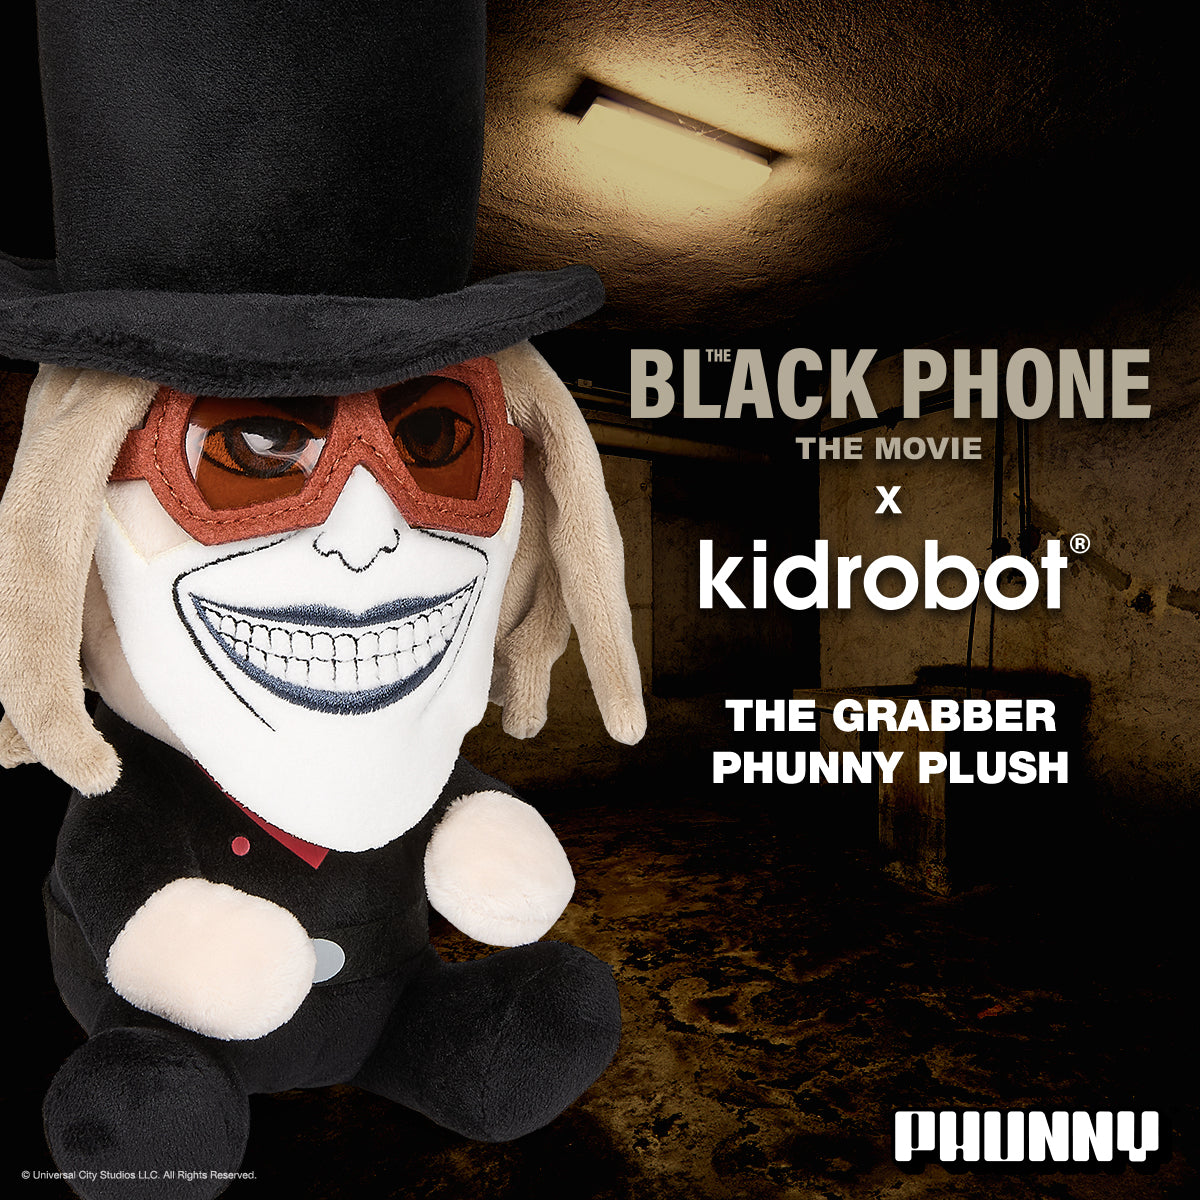 Kidrobot x Black Phone Movie Collectibles